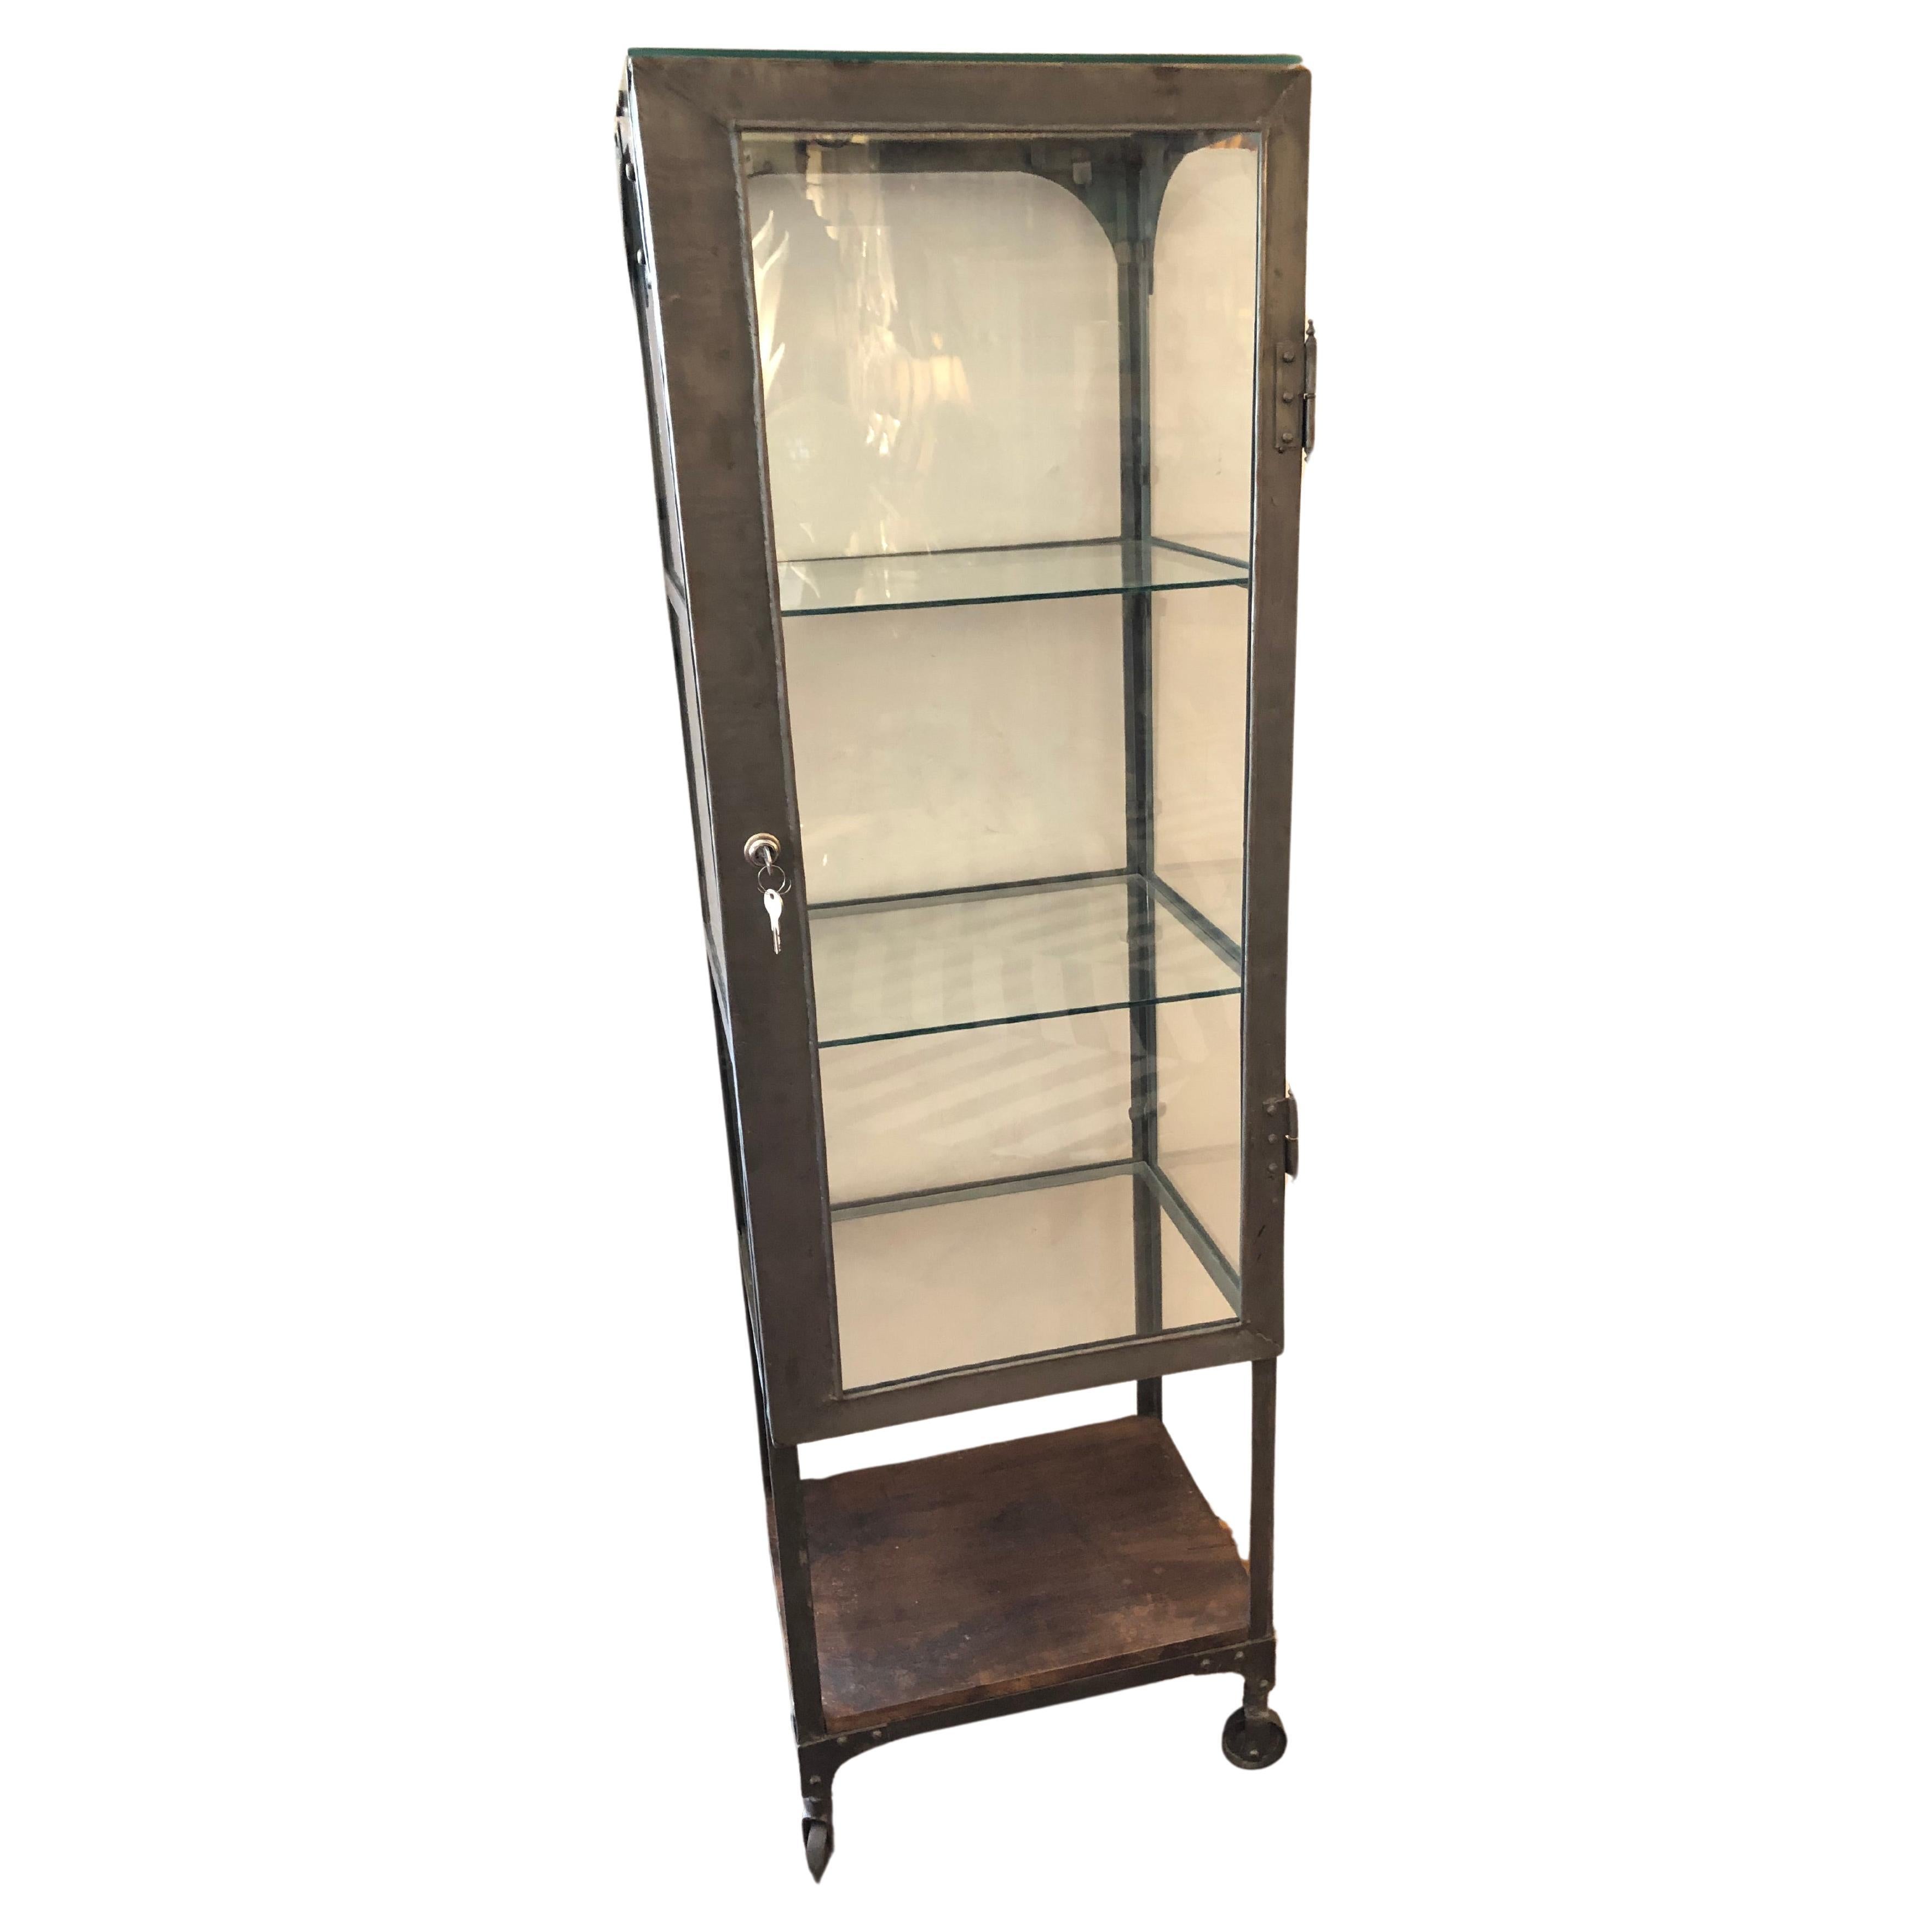 Versatile Vintage Steel and Glass Vitrine Medicine Cabinet on Wheels